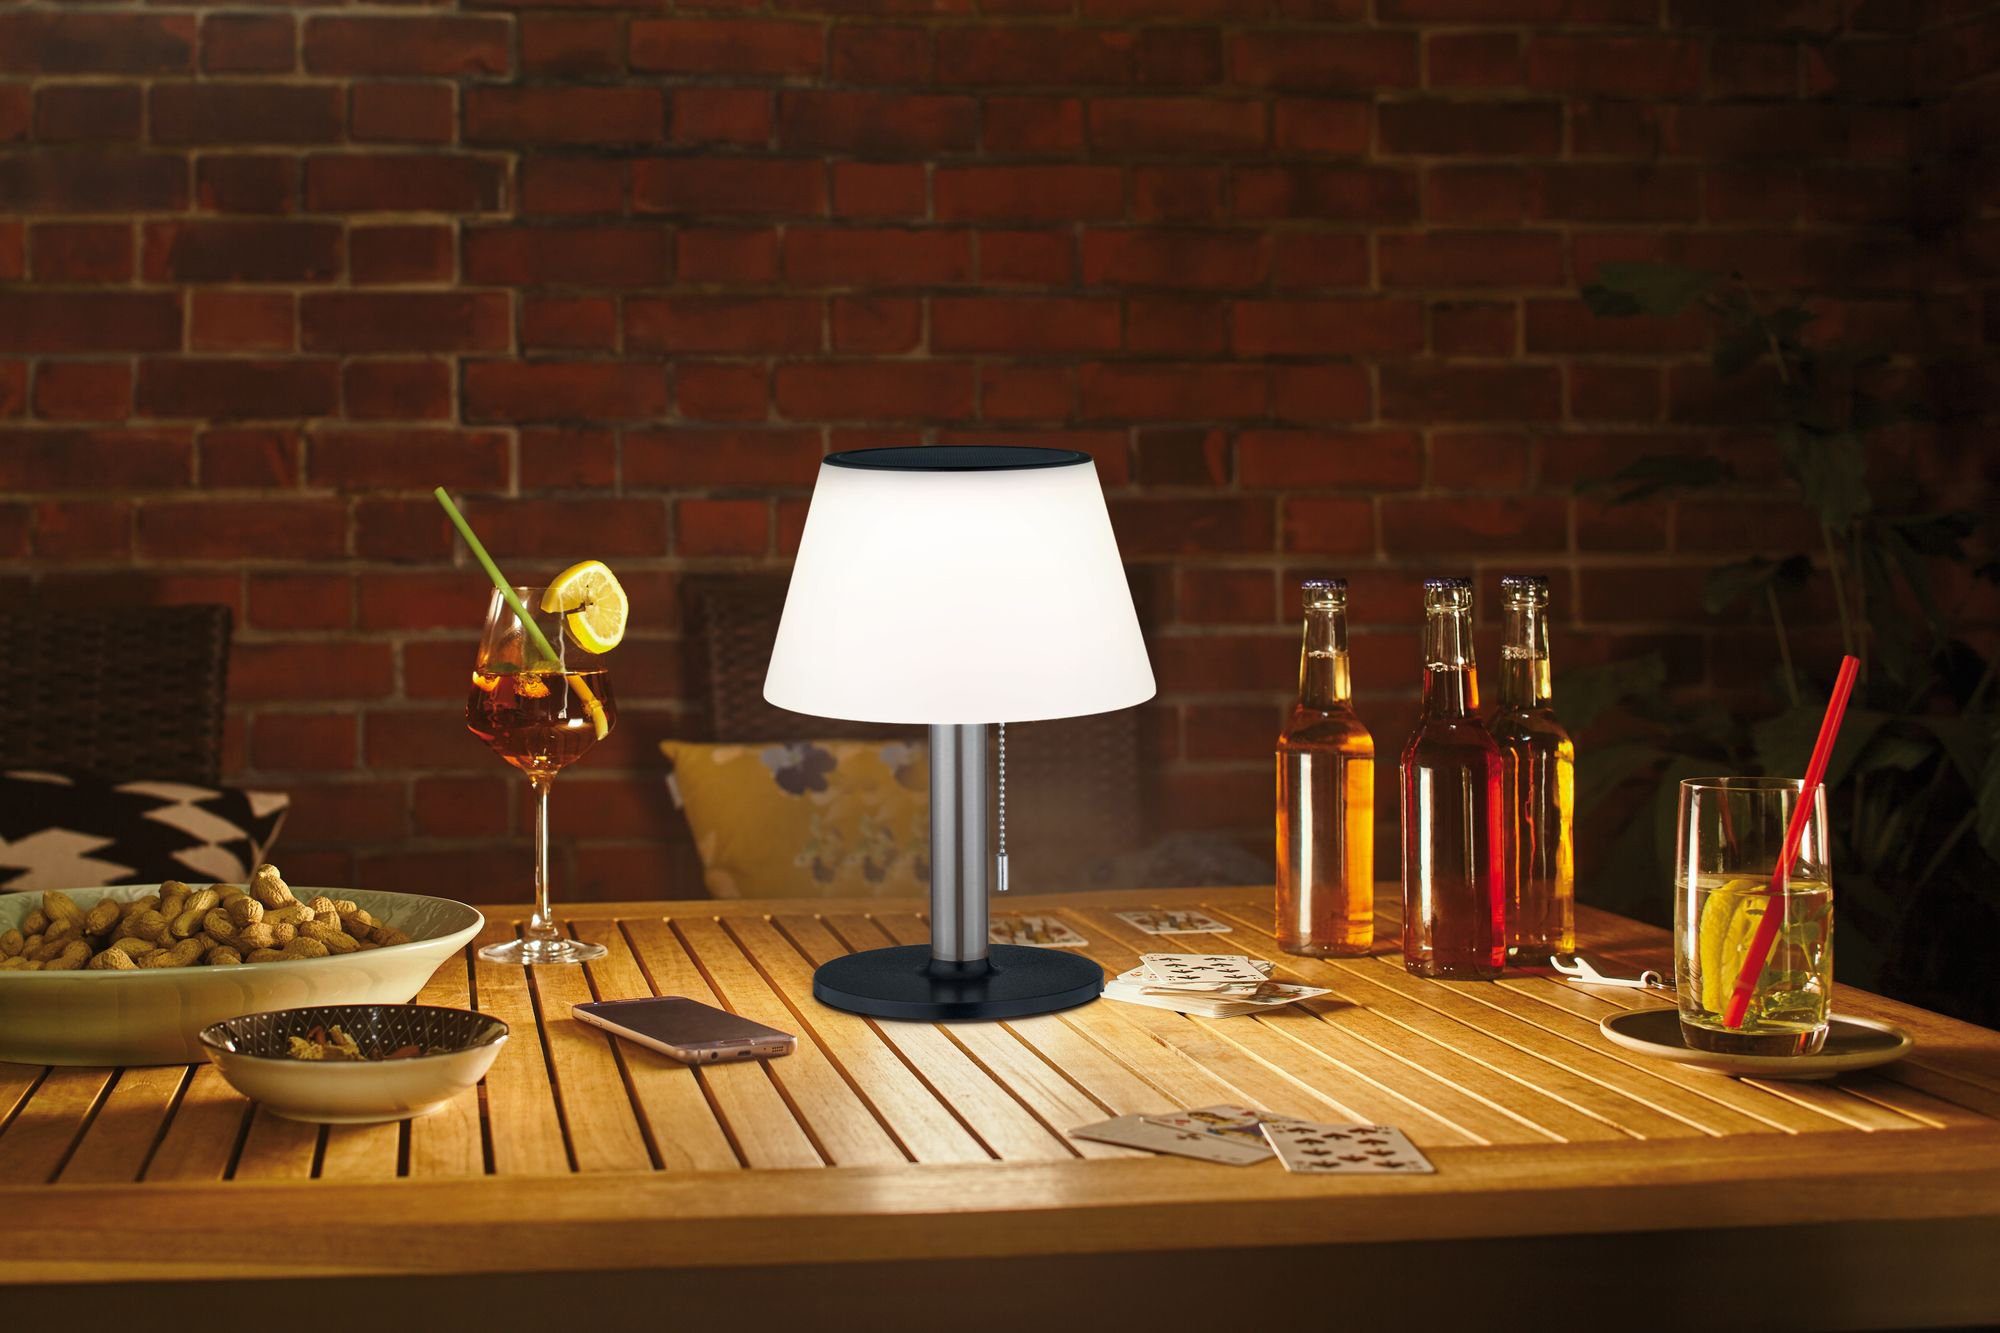 Paulmann LED Außen-Tischleuchte Lillesol, LED Warmweiß, integriert, Solar, LED-Board, dimmbar fest